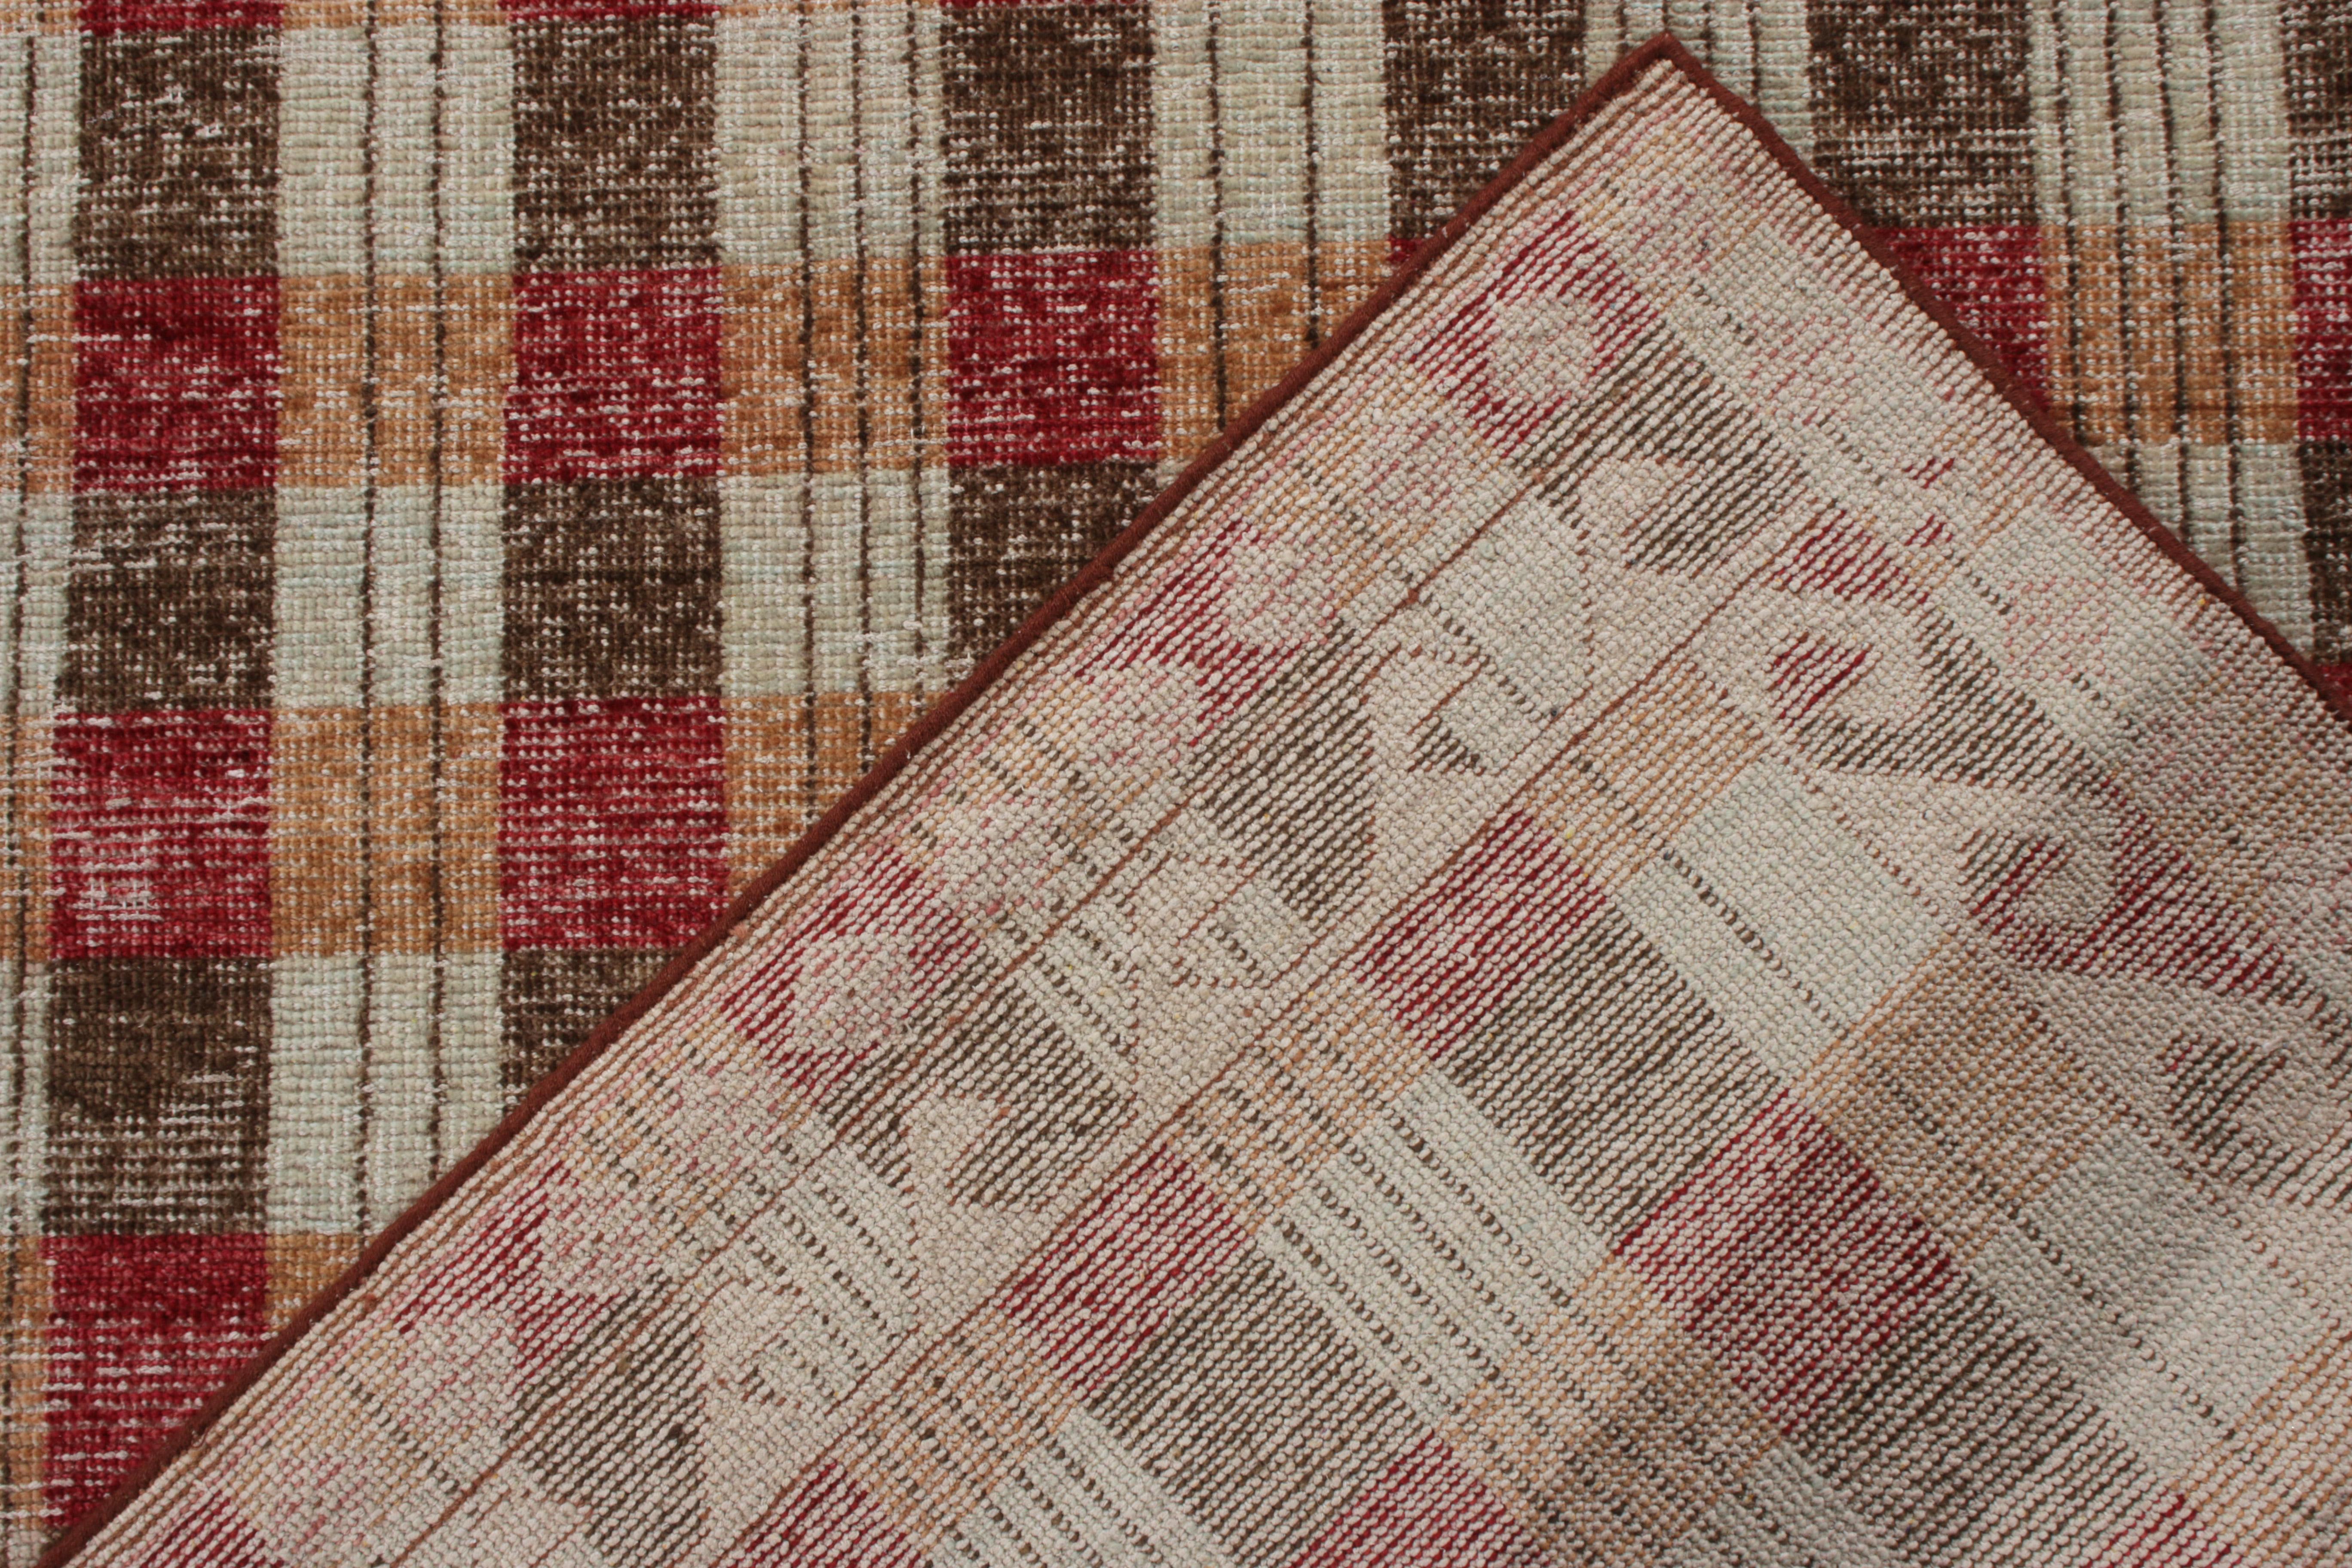 Rug & Kilim's Distressed Classic Style Teppich in Beige-Braun, rotes geometrisches Muster (Handgeknüpft) im Angebot